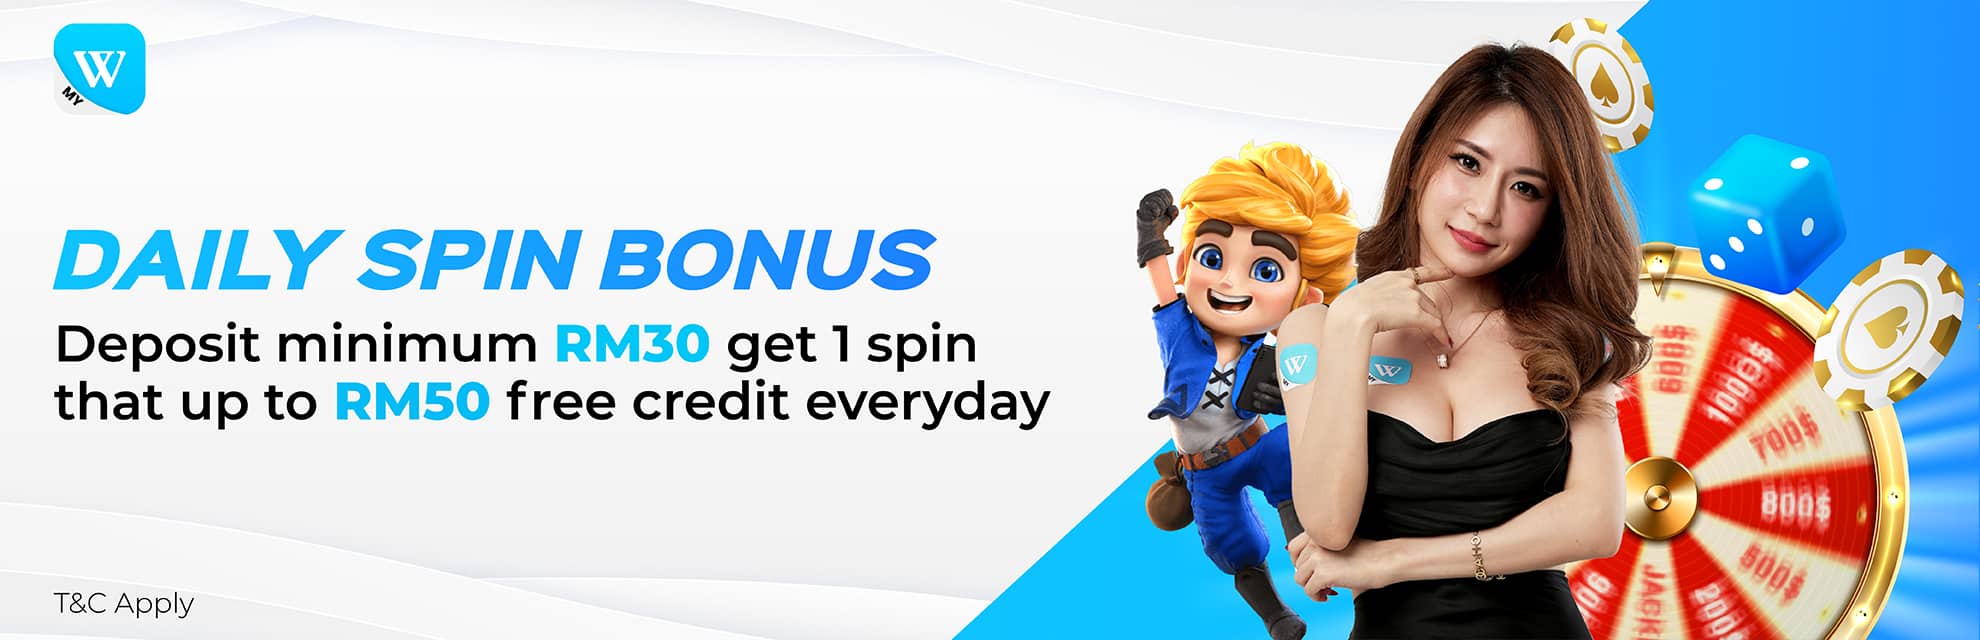 Daily Spin Bonus